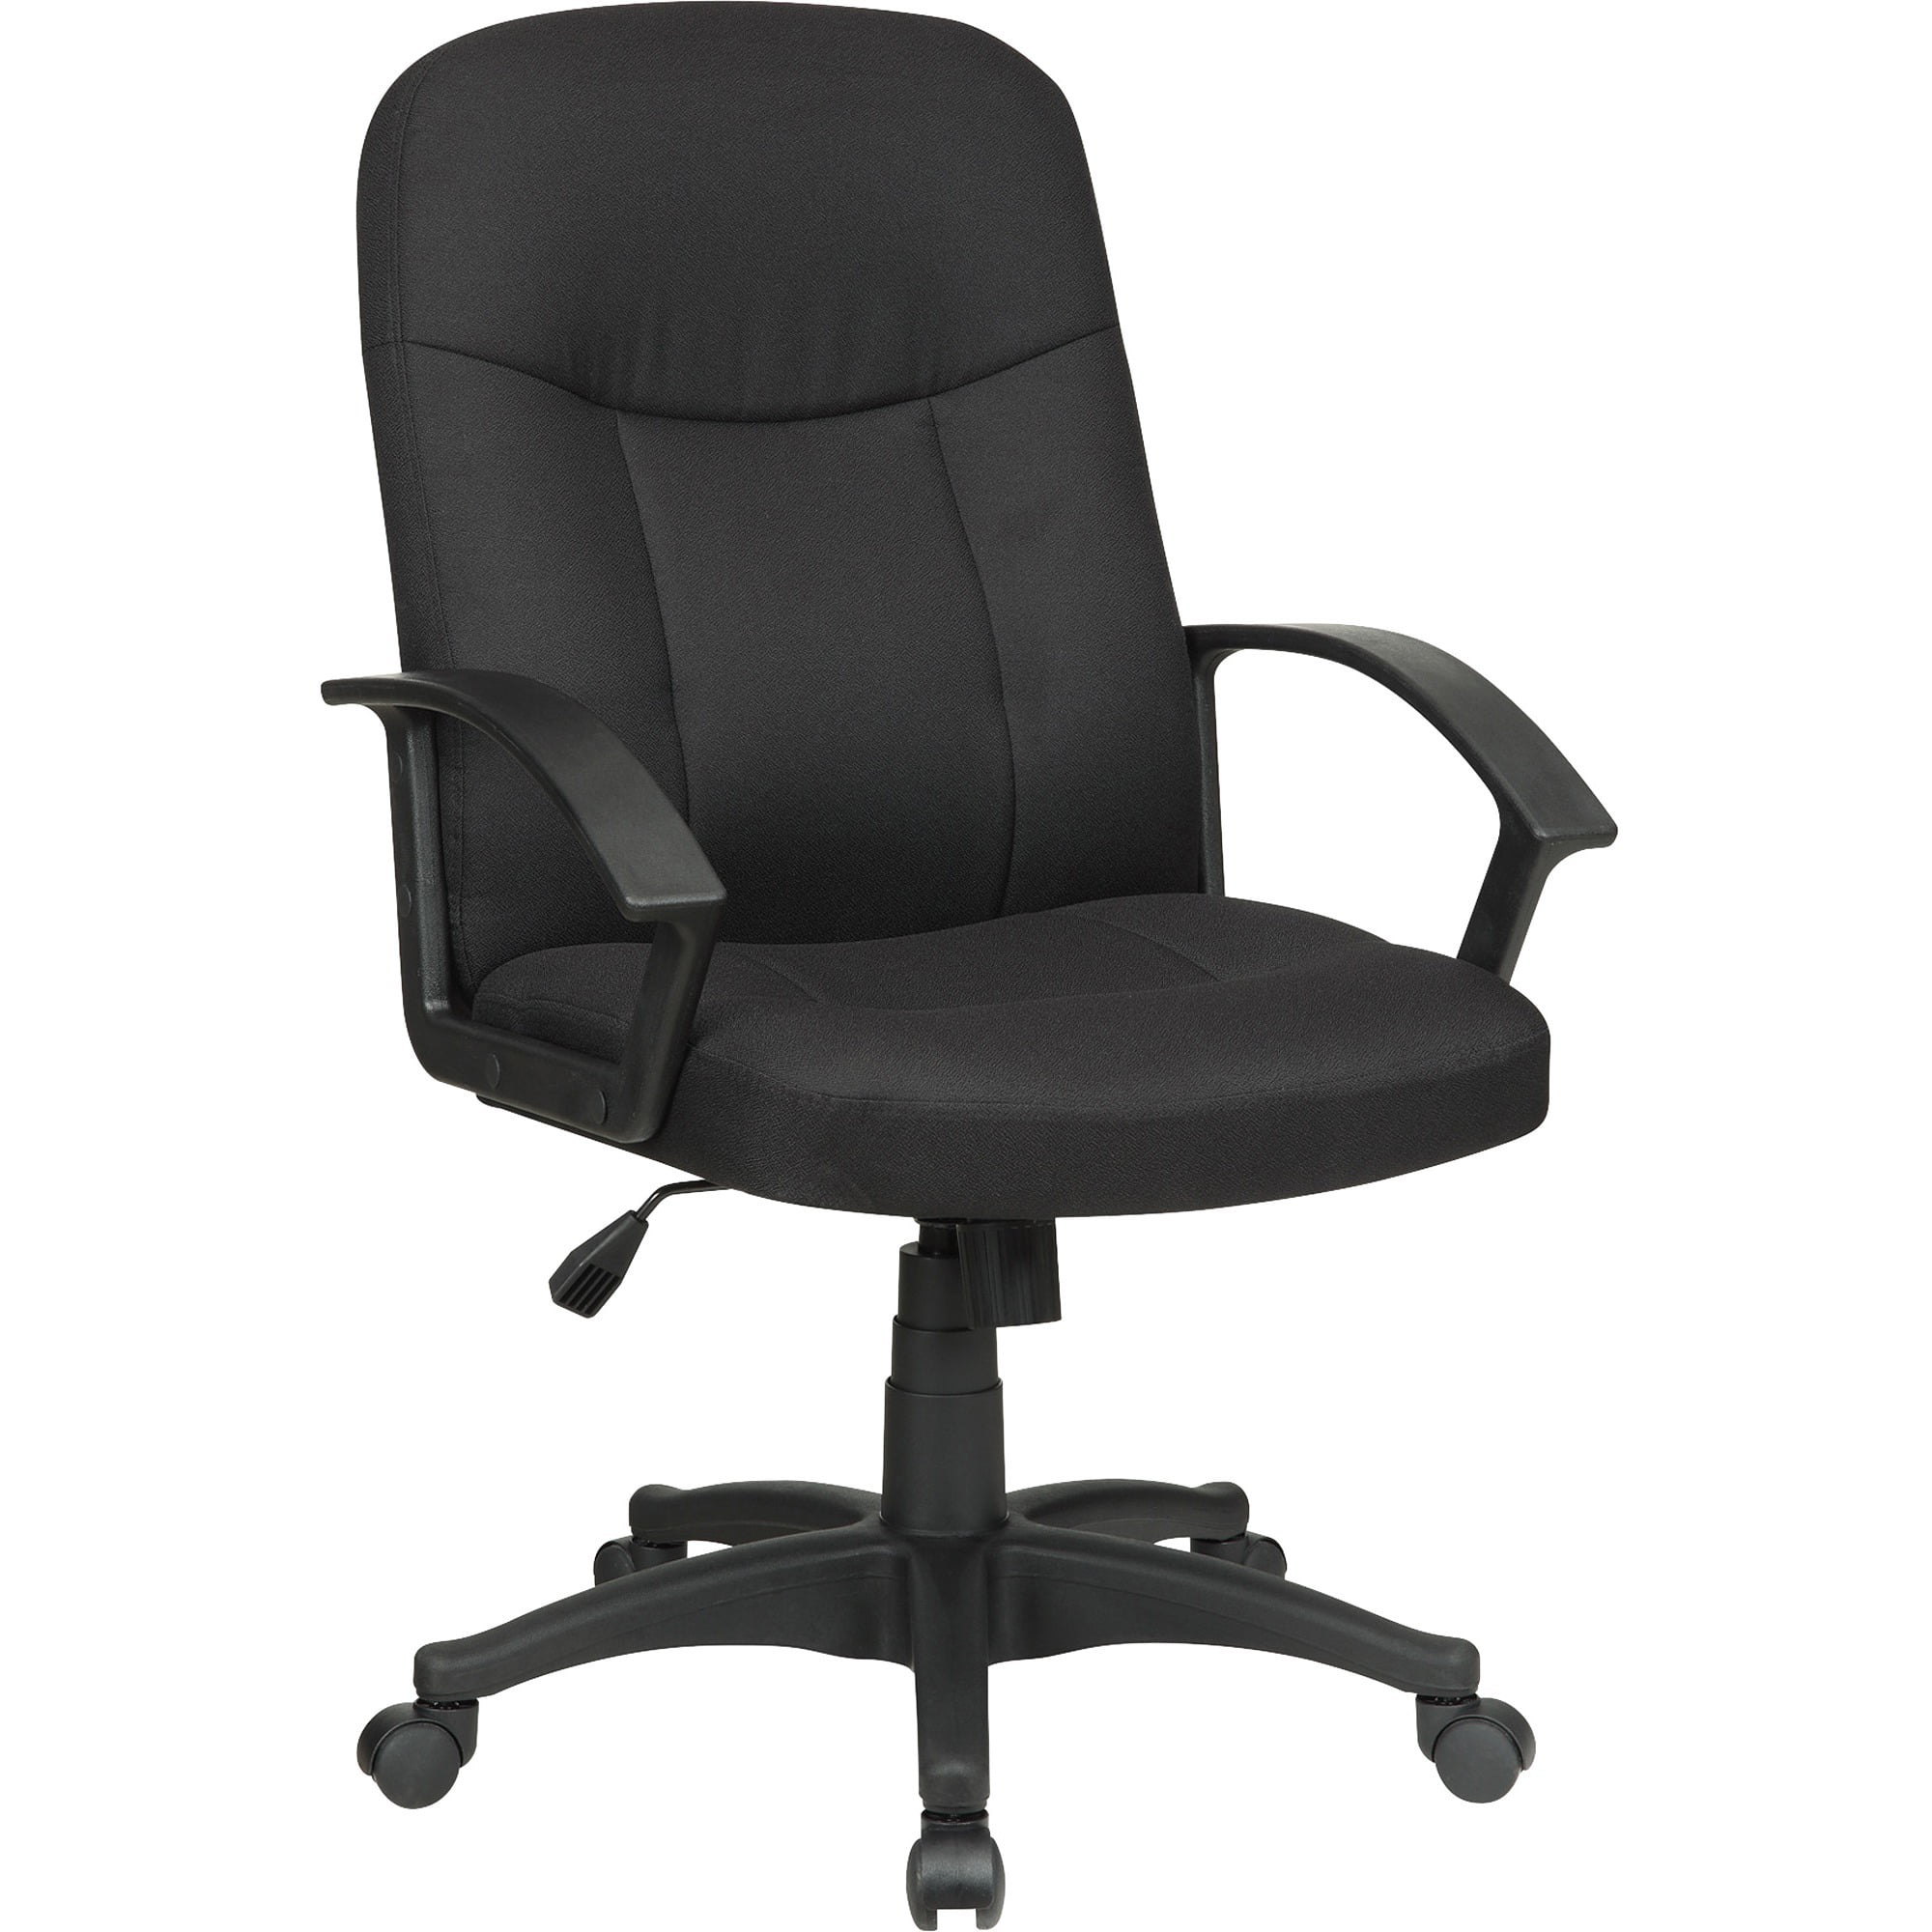 Lorell Executive Fabric Mid-Back Chair - Walmart.com ...